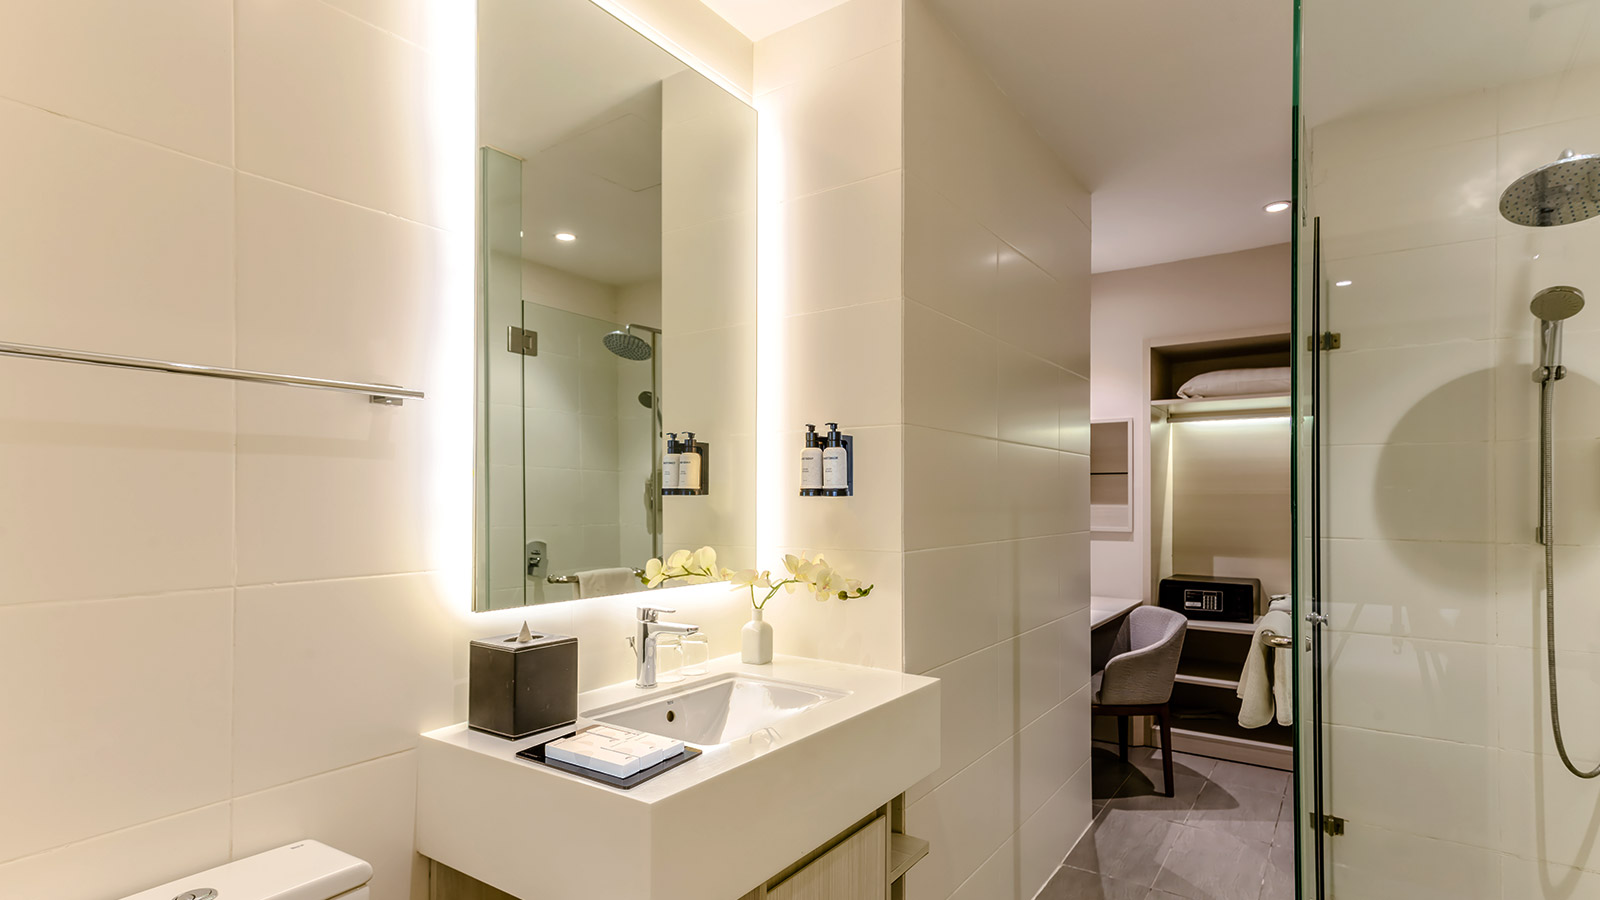 Shama Suasana Johor Bahru - One Bedroom Suite Bathroom - Shama Suasana Johor Bahru